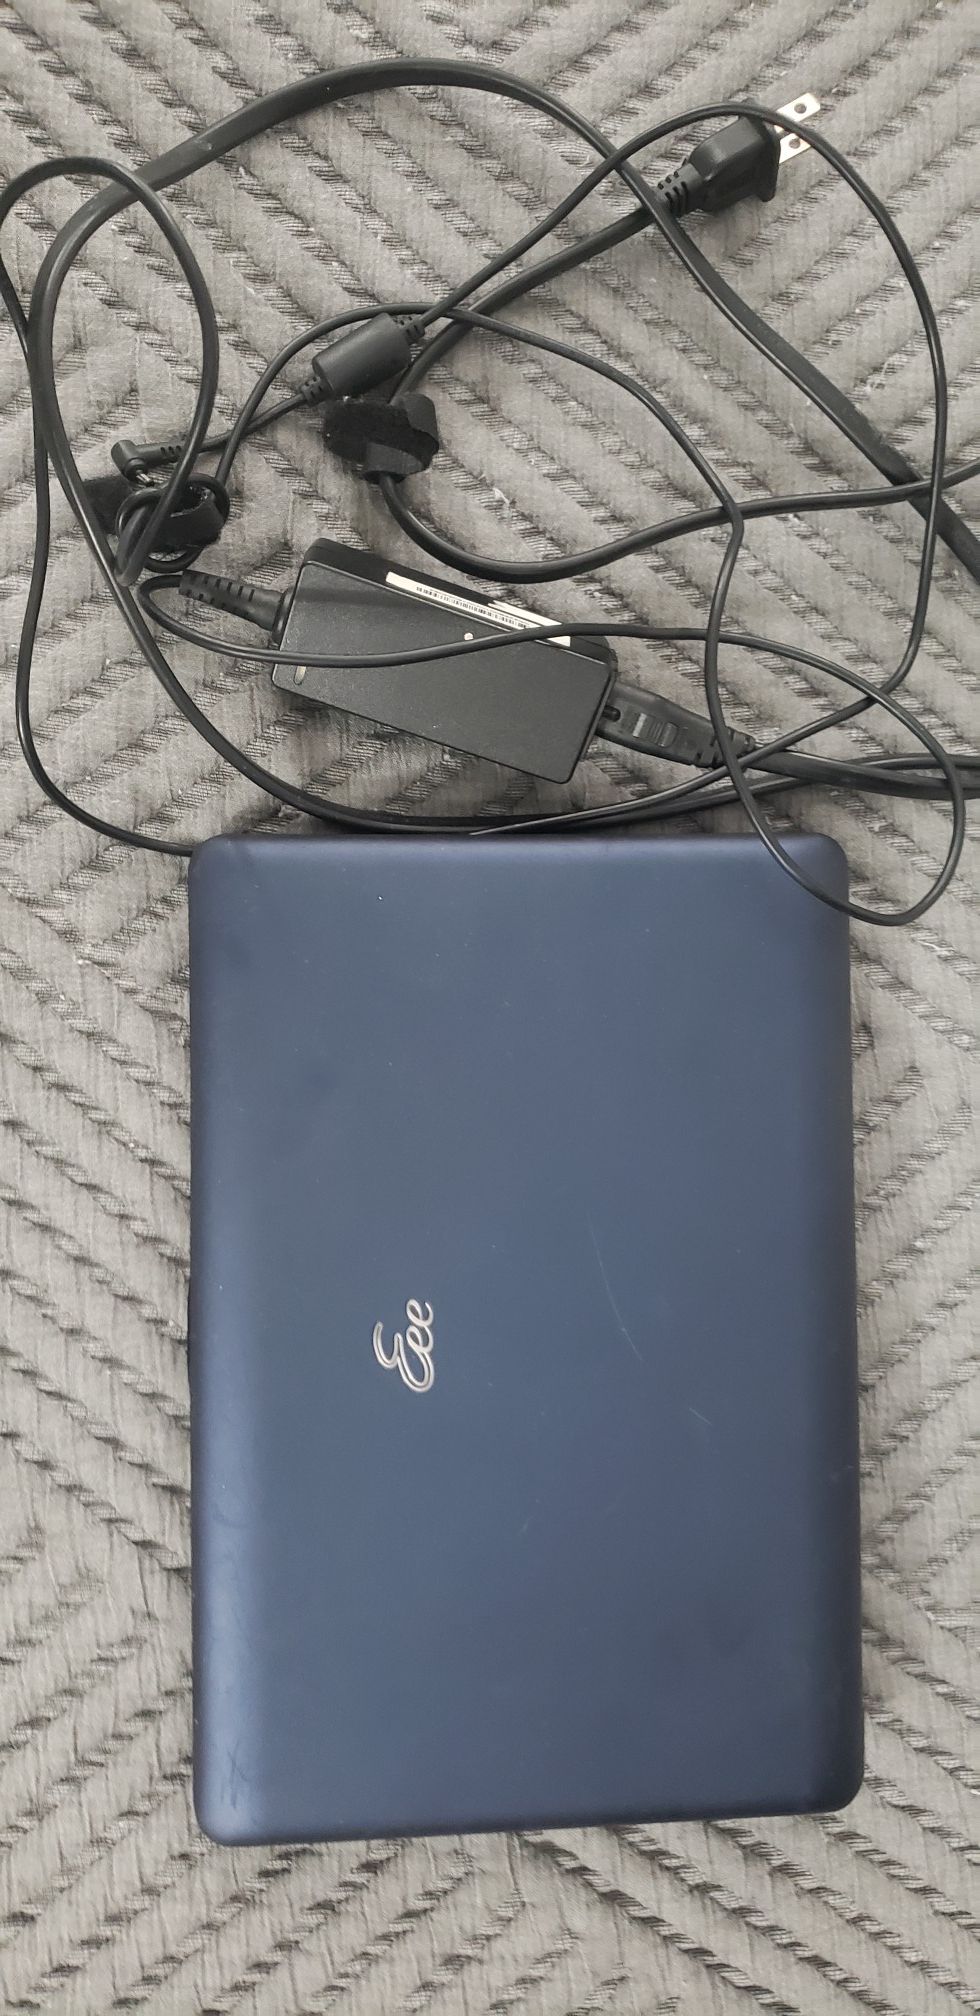 Asus Eee mini laptop